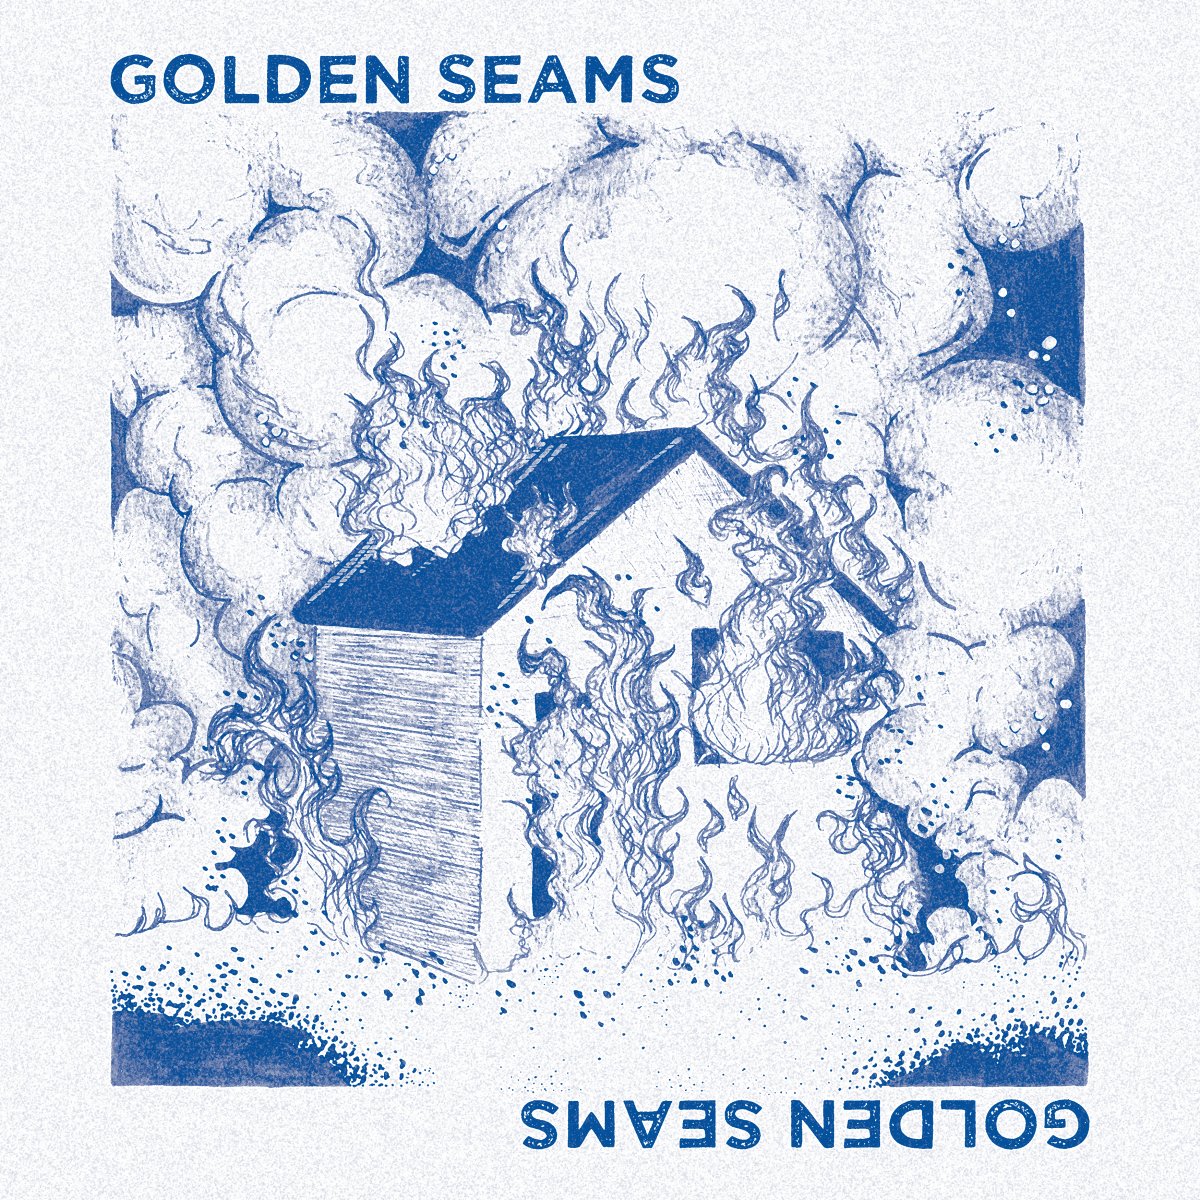 Golden Seams - Golden Seams EP [Vinyl]